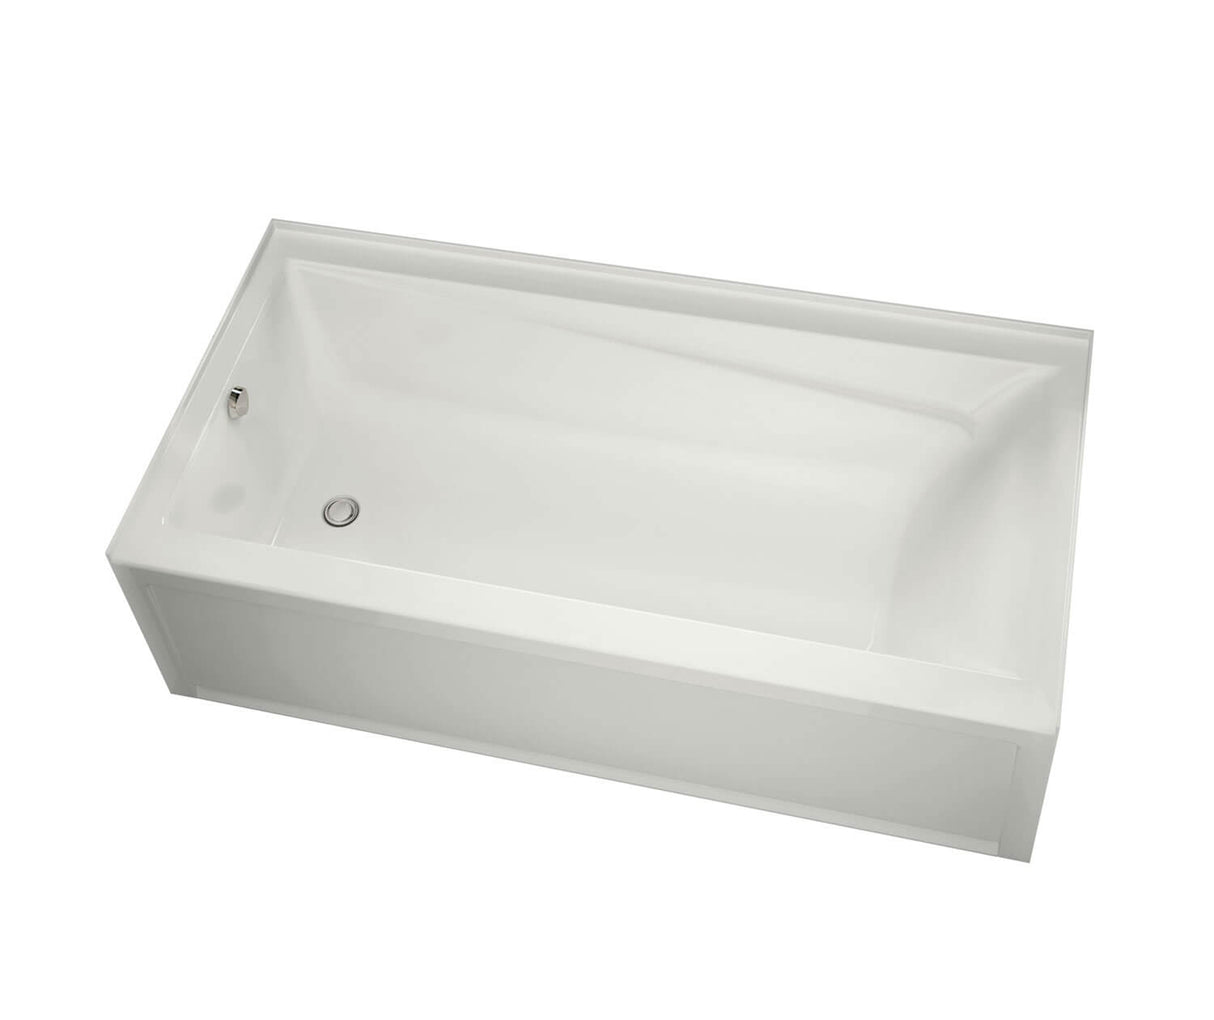 MAAX 106176-000-001-102 Exhibit 6042 IFS AFR Acrylic Alcove Left-Hand Drain Bathtub in White